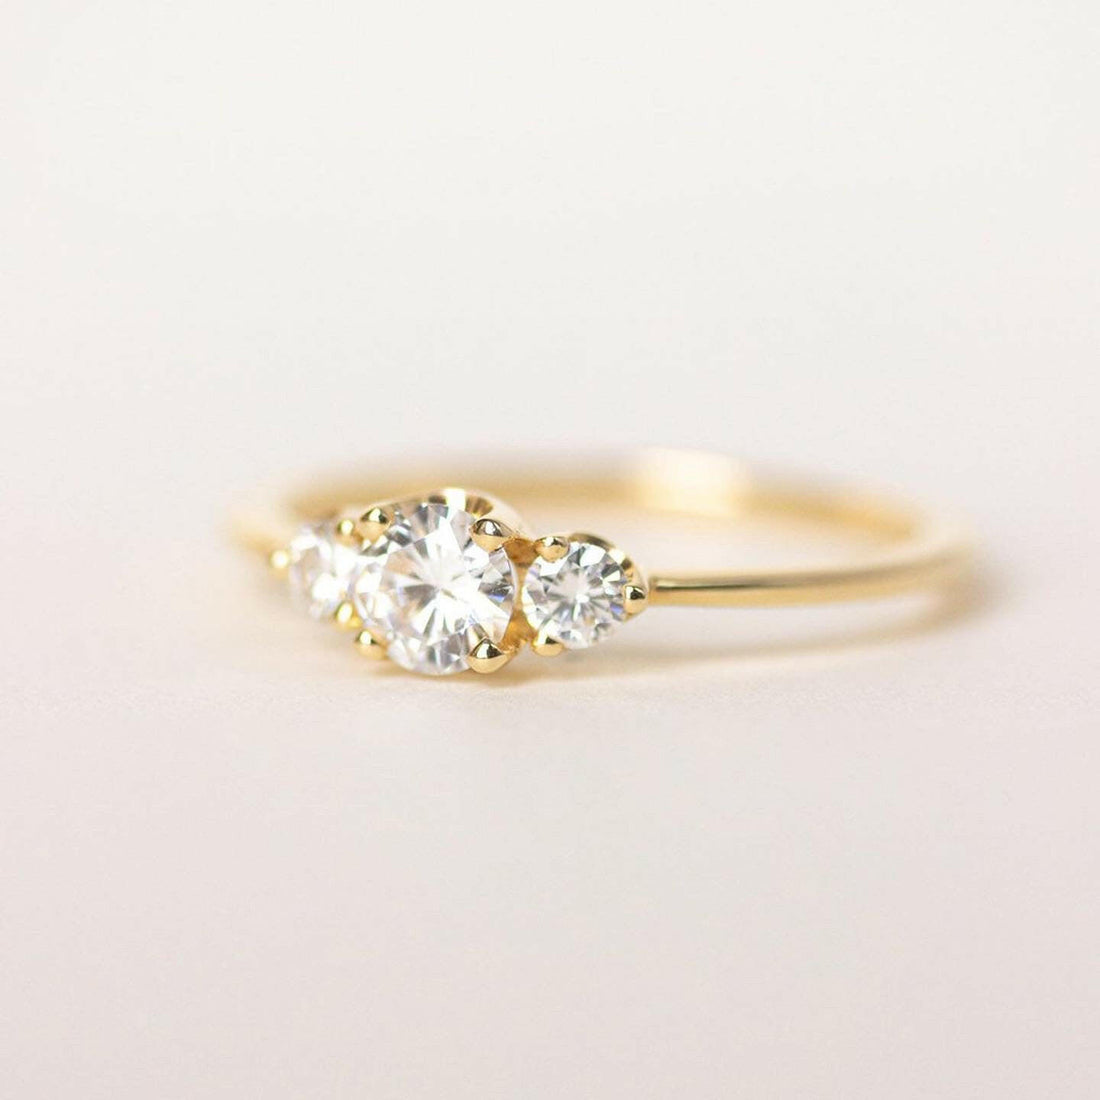 Three Diamond Engagement Ring l Engagement Jewelry Designer Brand in NYC